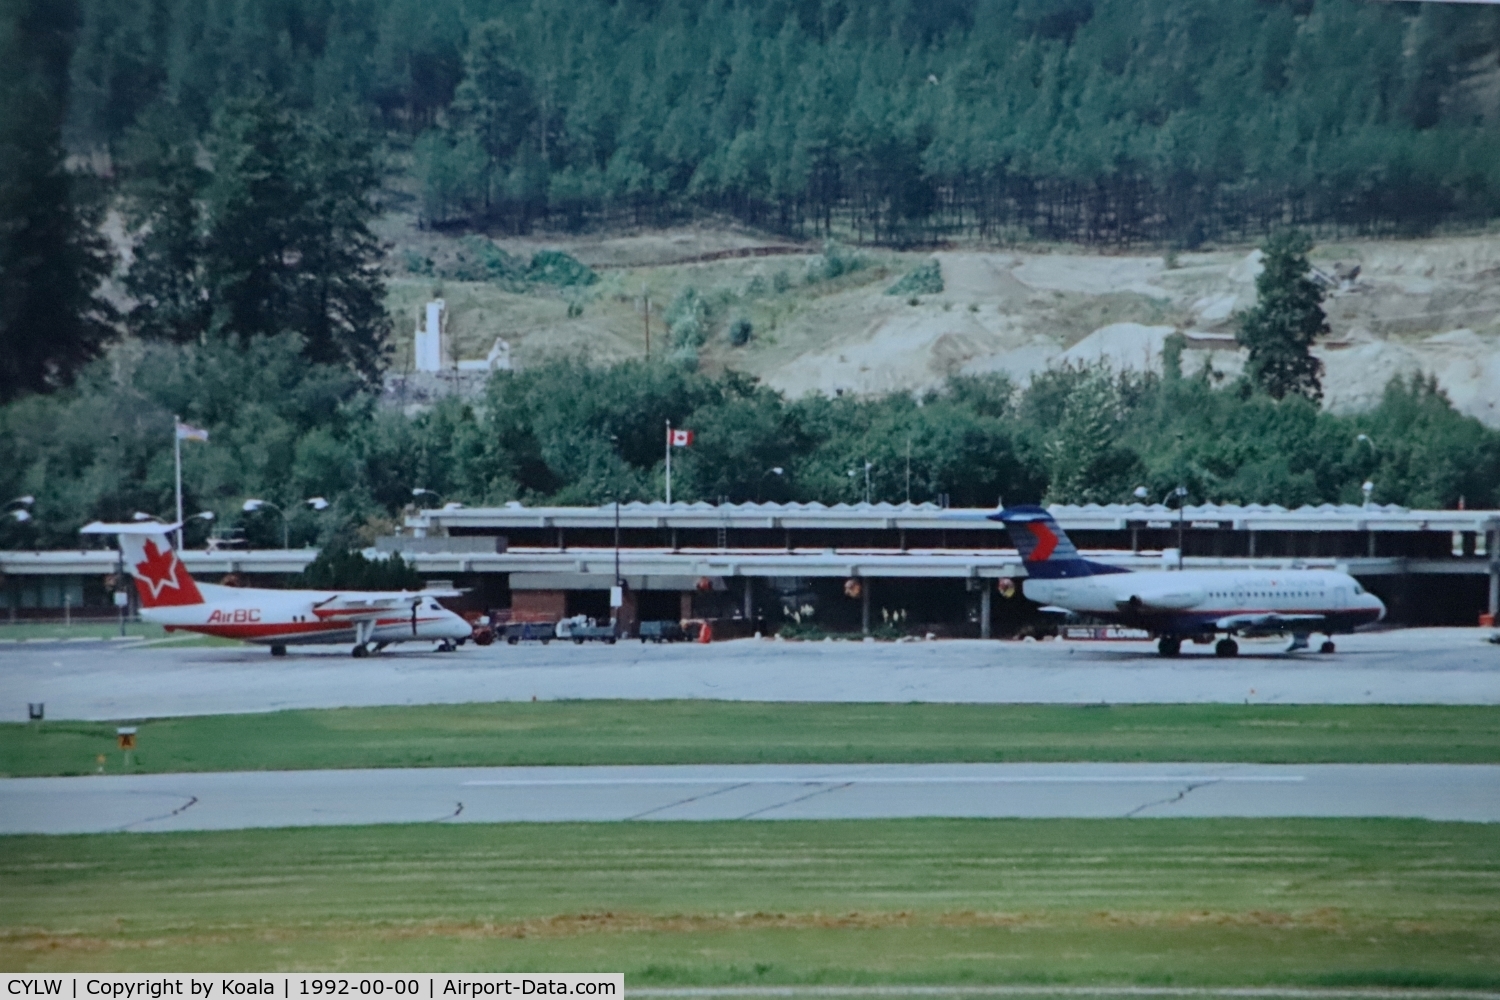 Kelowna International Airport, Kelowna, British Columbia Canada (CYLW) - Old days at Kelowna